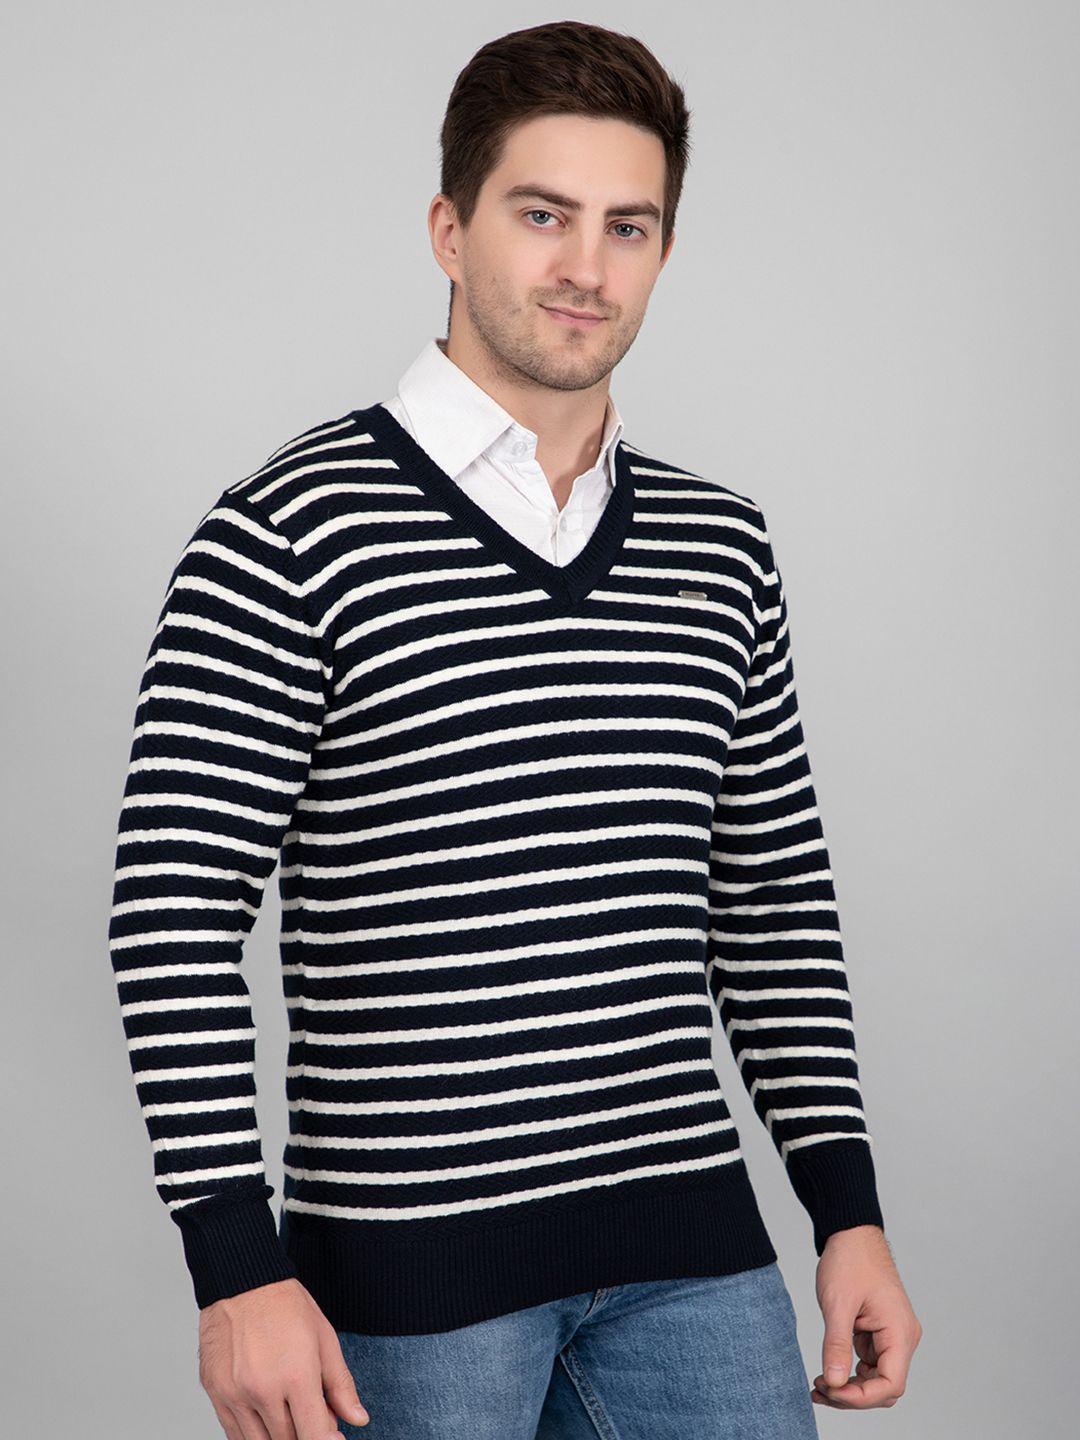 godfrey men acrylic striped pullover